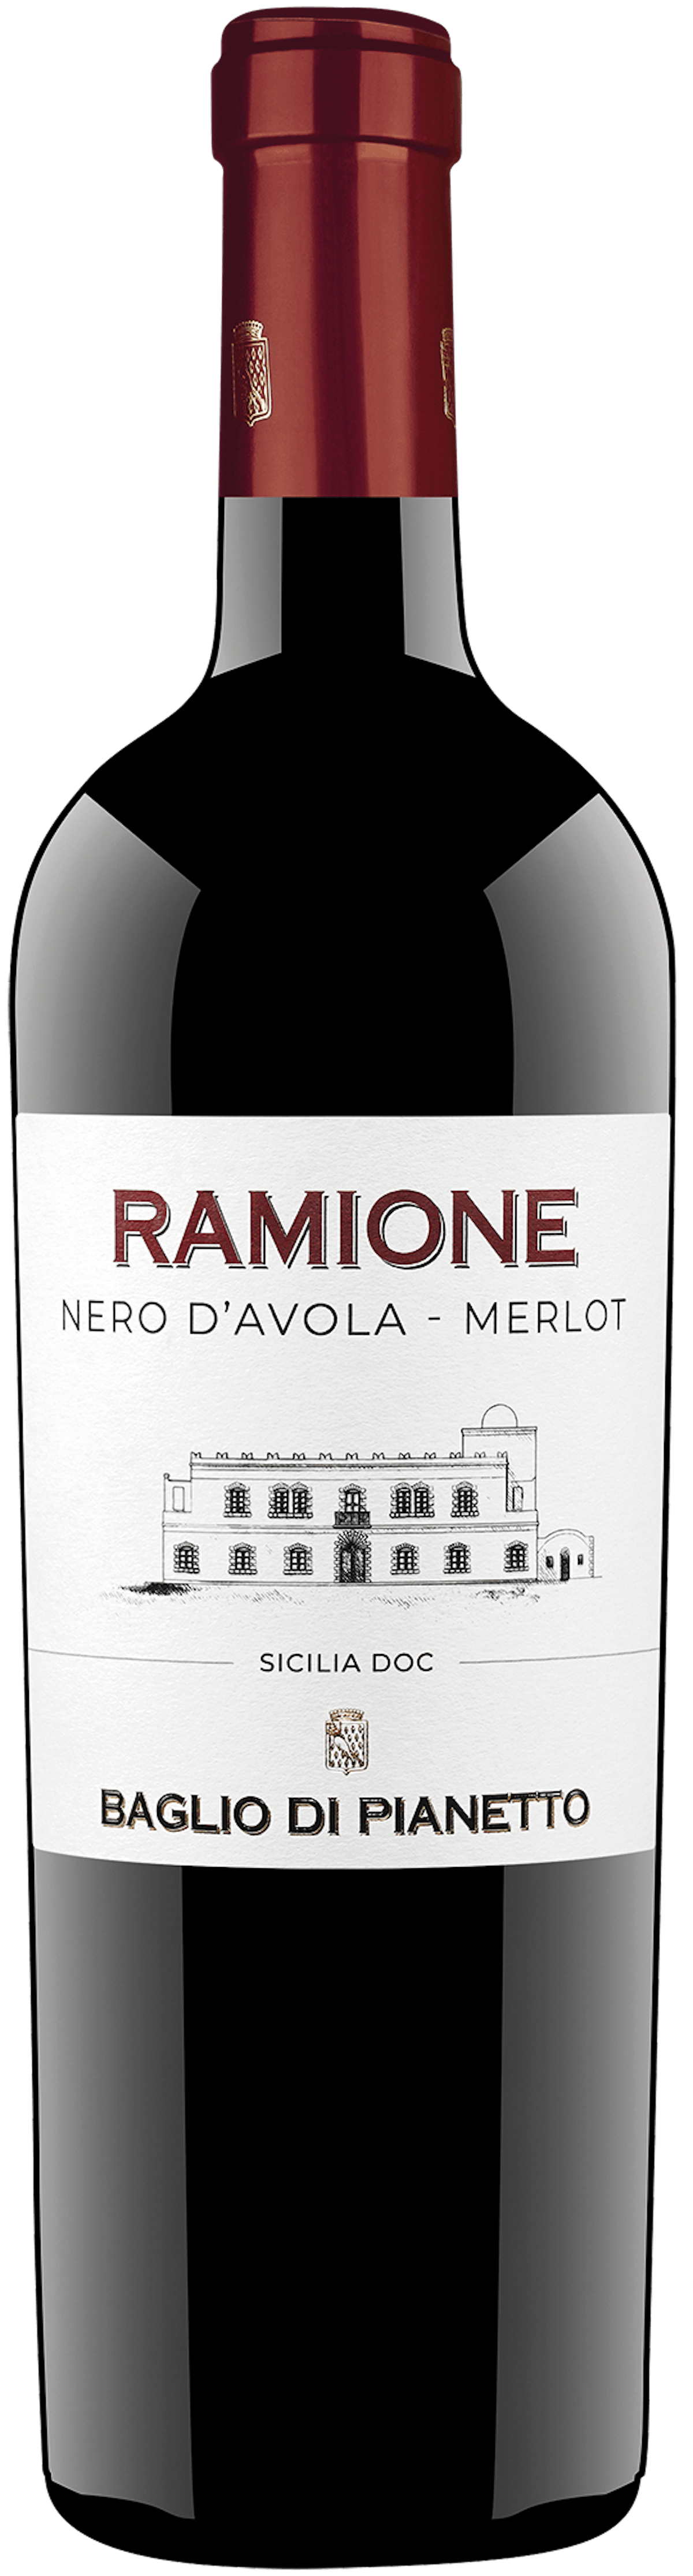 Ramione Merlot & Nero d'Avola